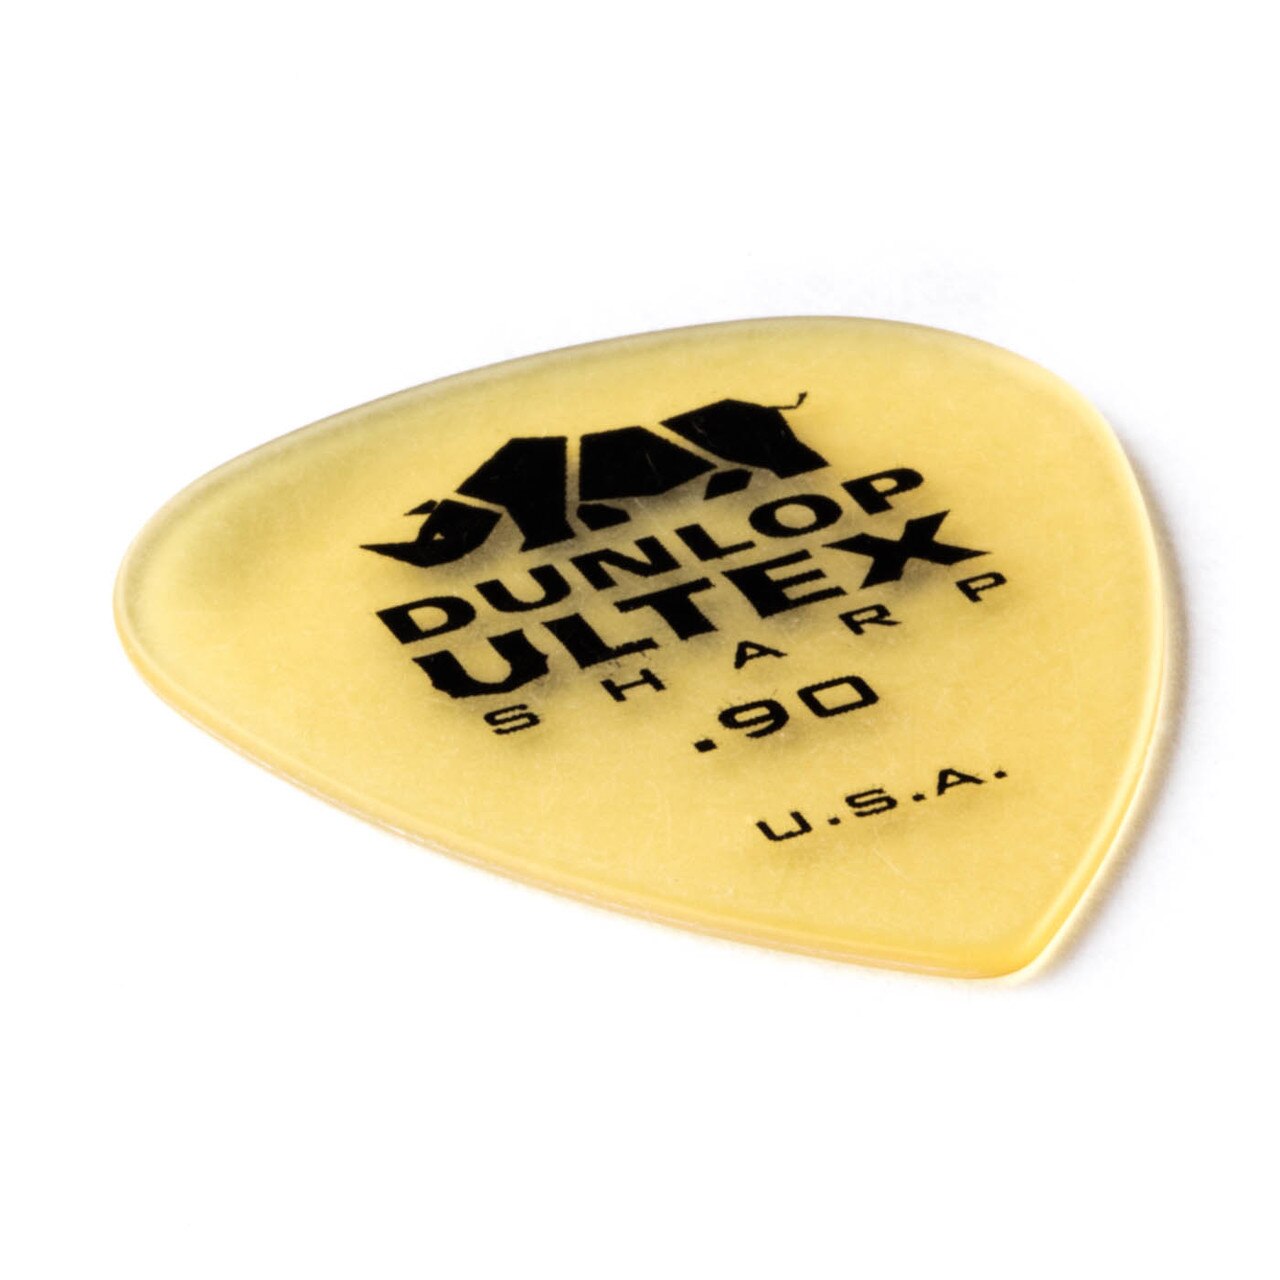 Jim Dunlop Ultex Sharp 433 0.90mm - Púas - Variation 1